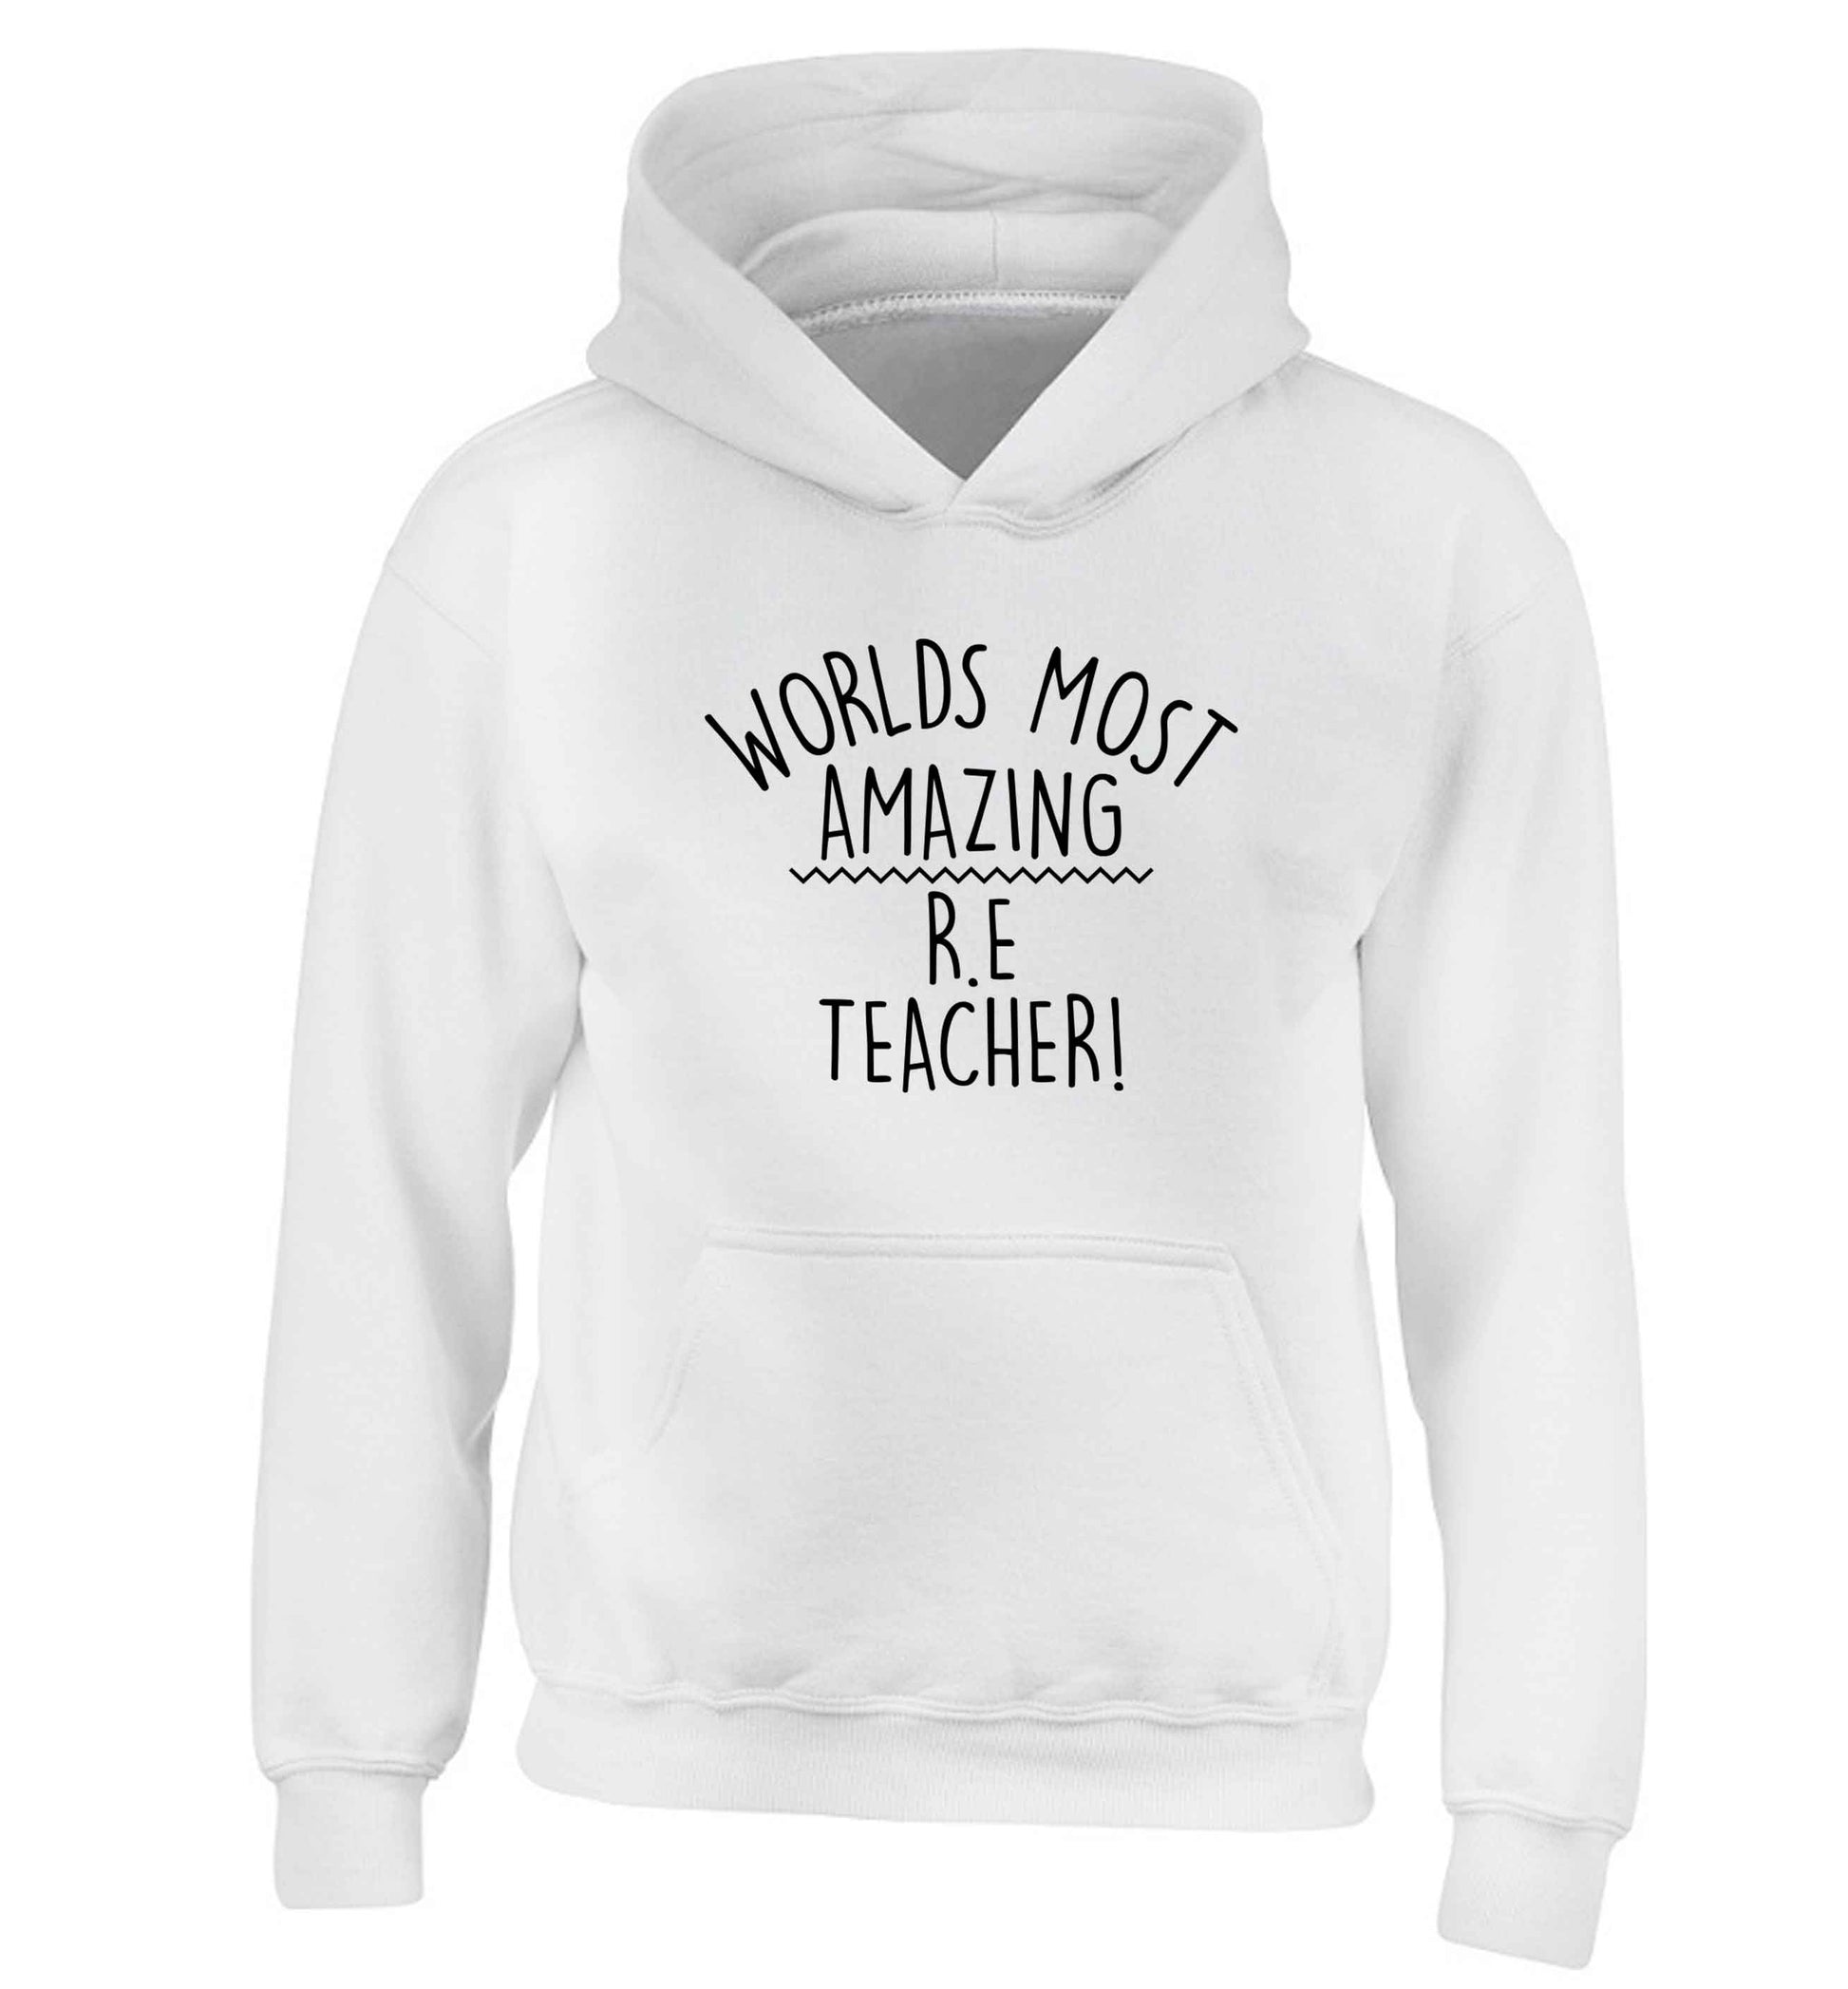 Worlds most amazing R.E teacher children's white hoodie 12-13 Years